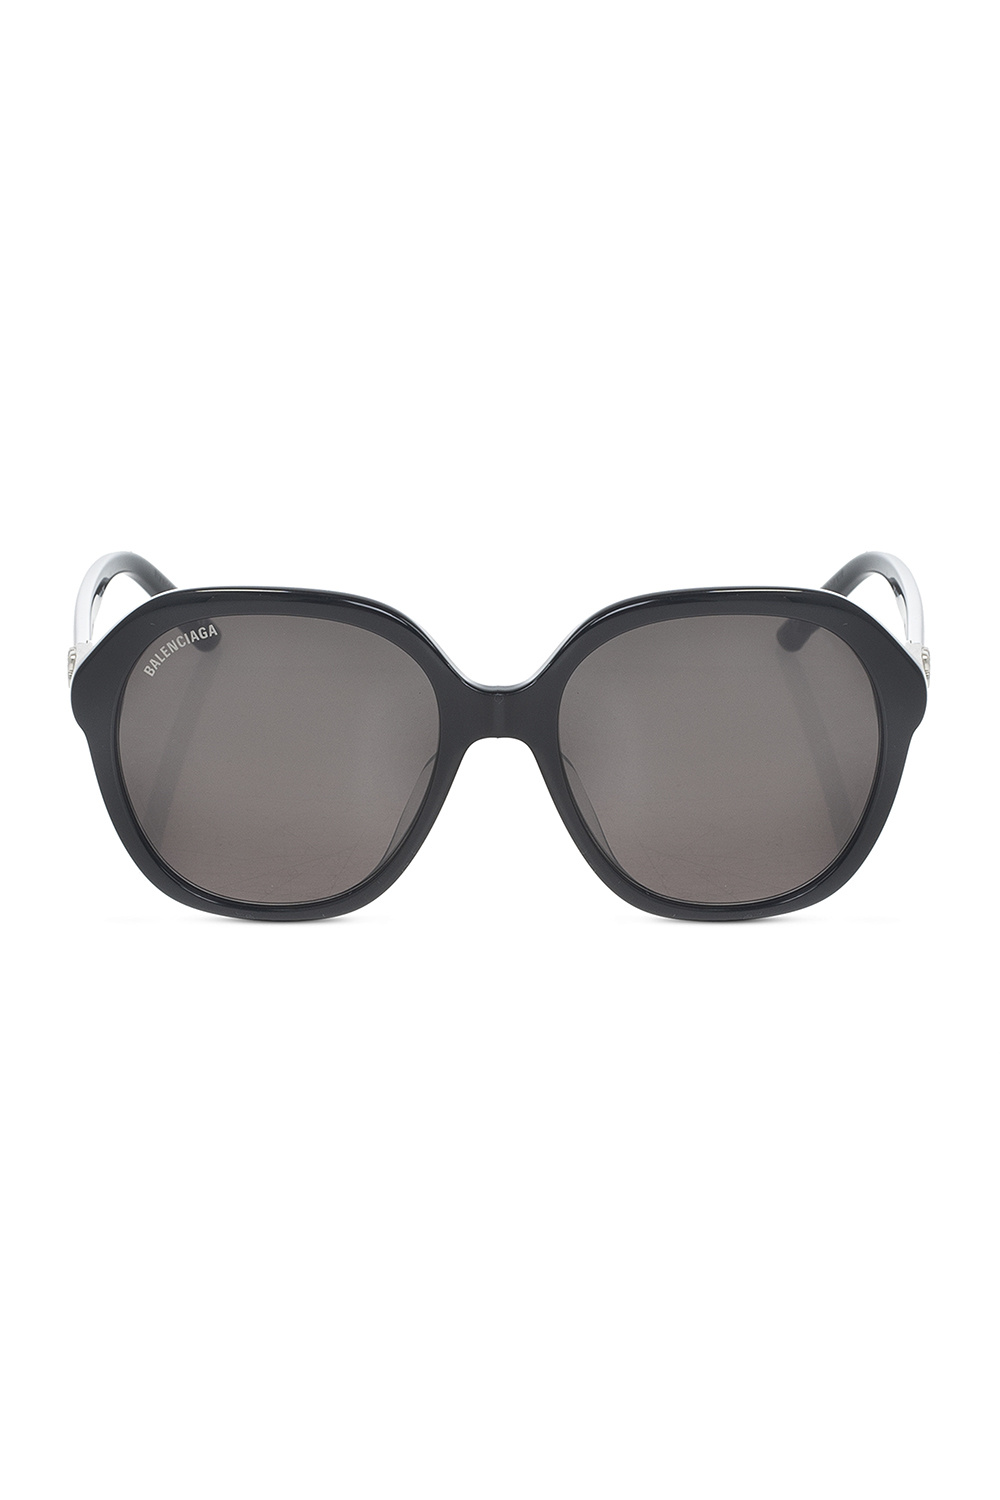 Balenciaga square-frame sunglasses Blu